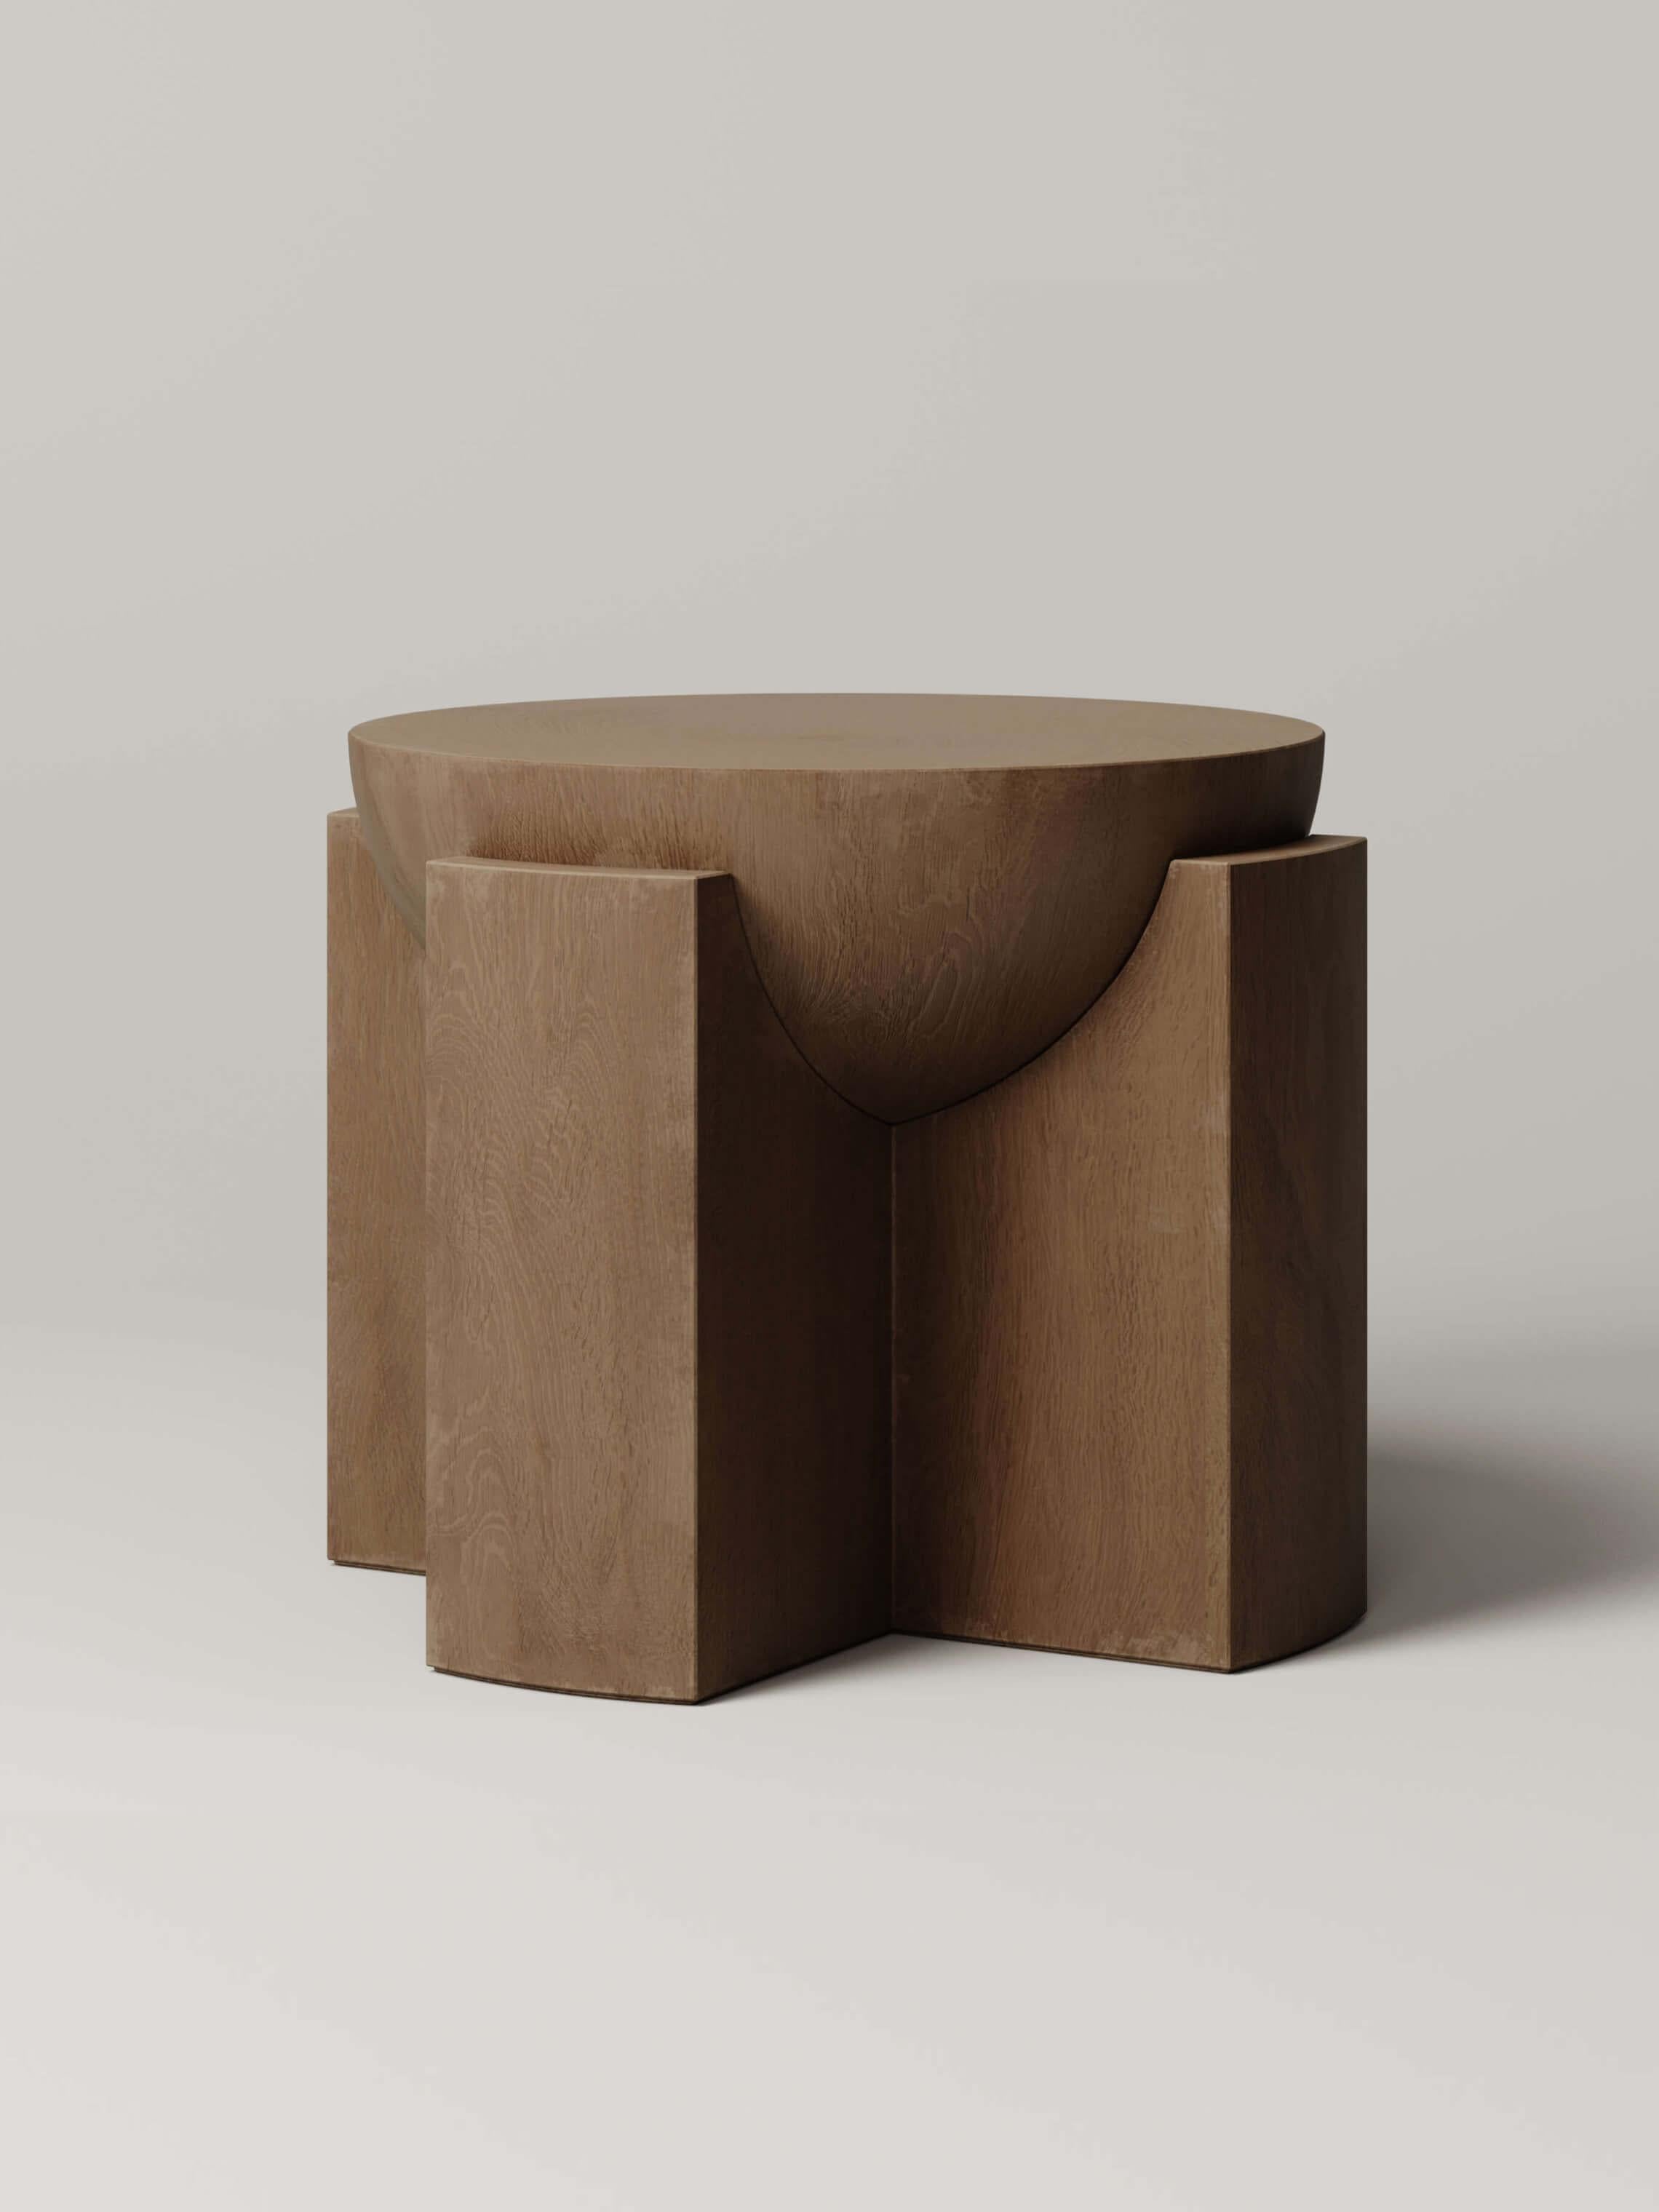 Stone M_002 Side Table designed by Studio Le Cann for Monolith Studio, Lava Rock For Sale